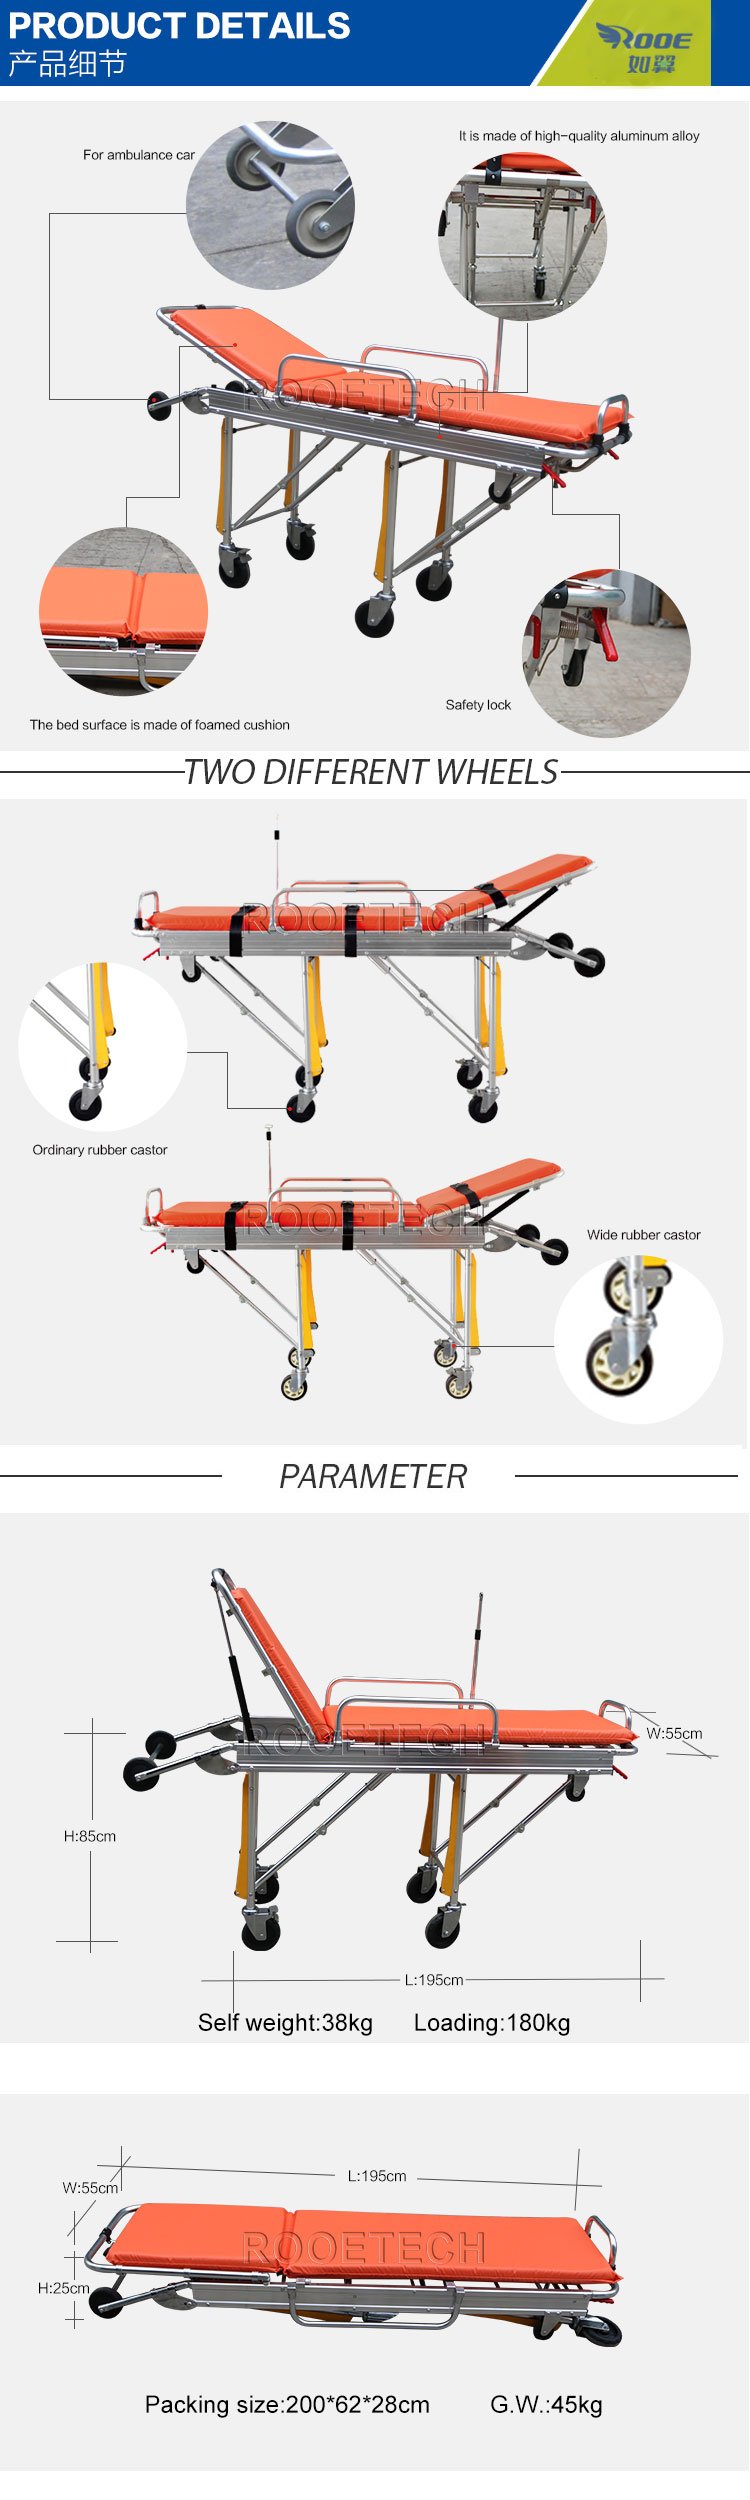 automatic loading ambulance stretcher,patient transport stretcher,emergency transport stretcher,stretcher ambulance transport,automatic loading stretcher 